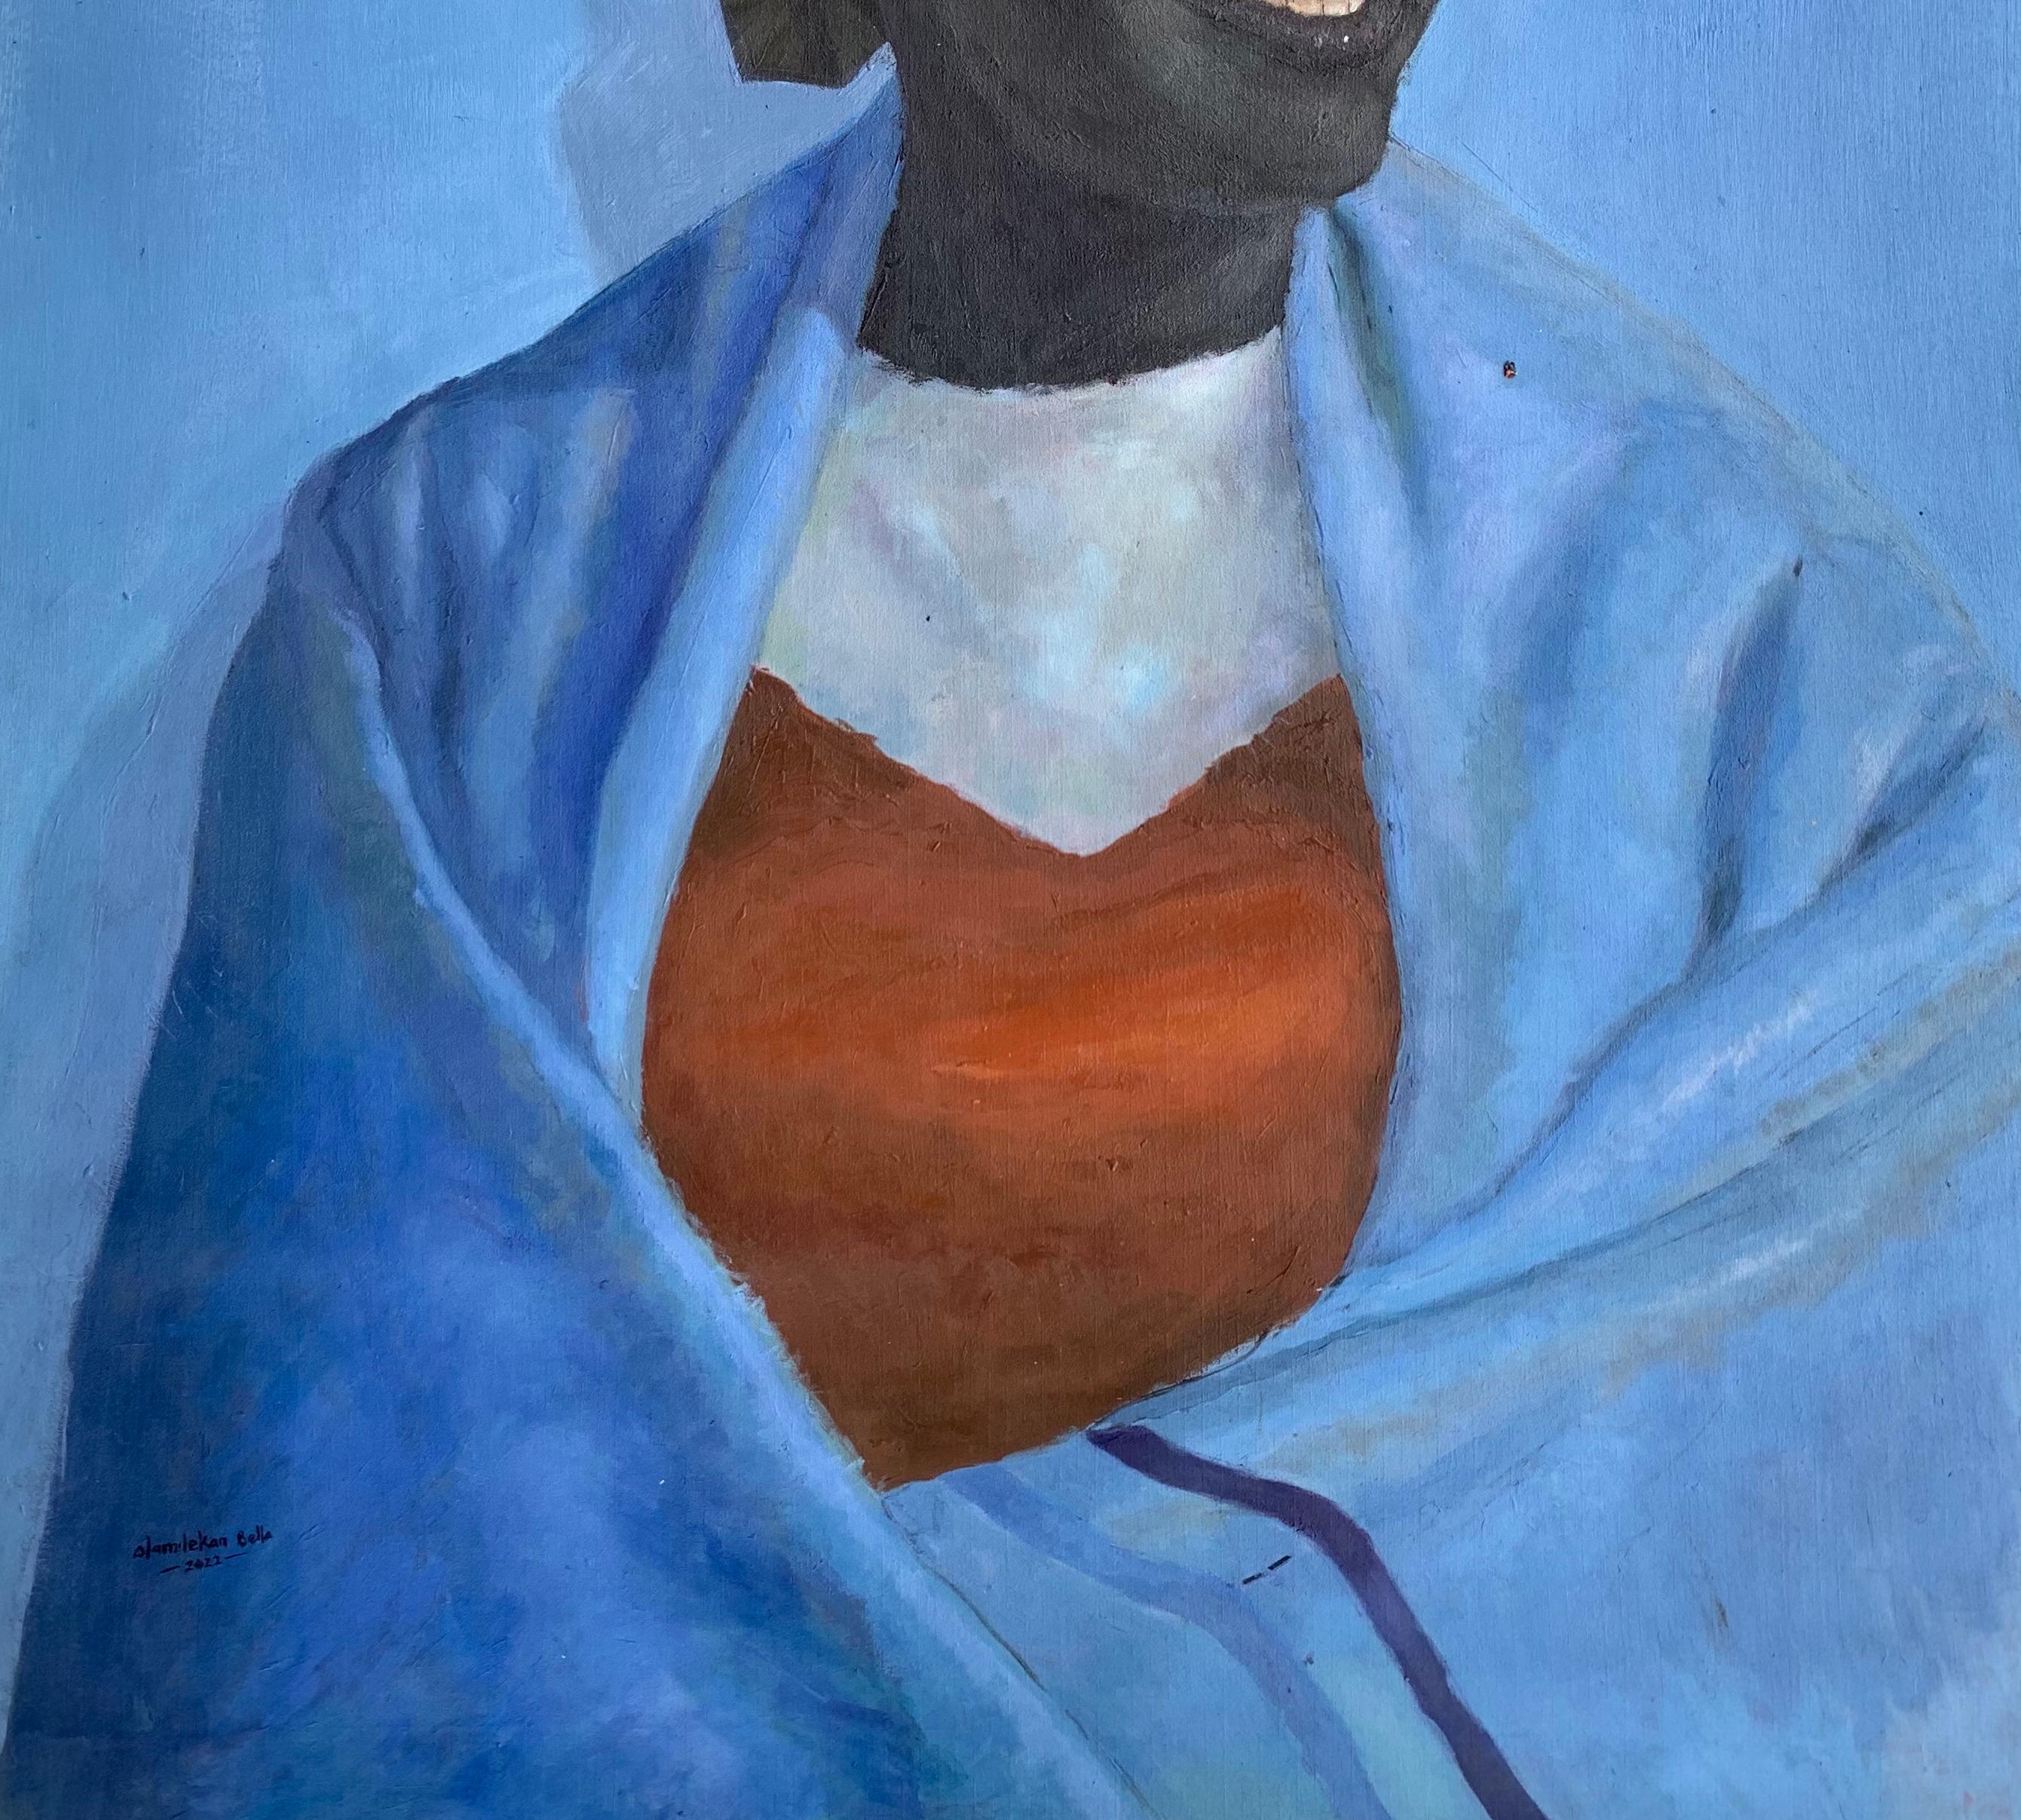 Blaues Handtuch 1 (Expressionismus), Painting, von Olamilekan Bello